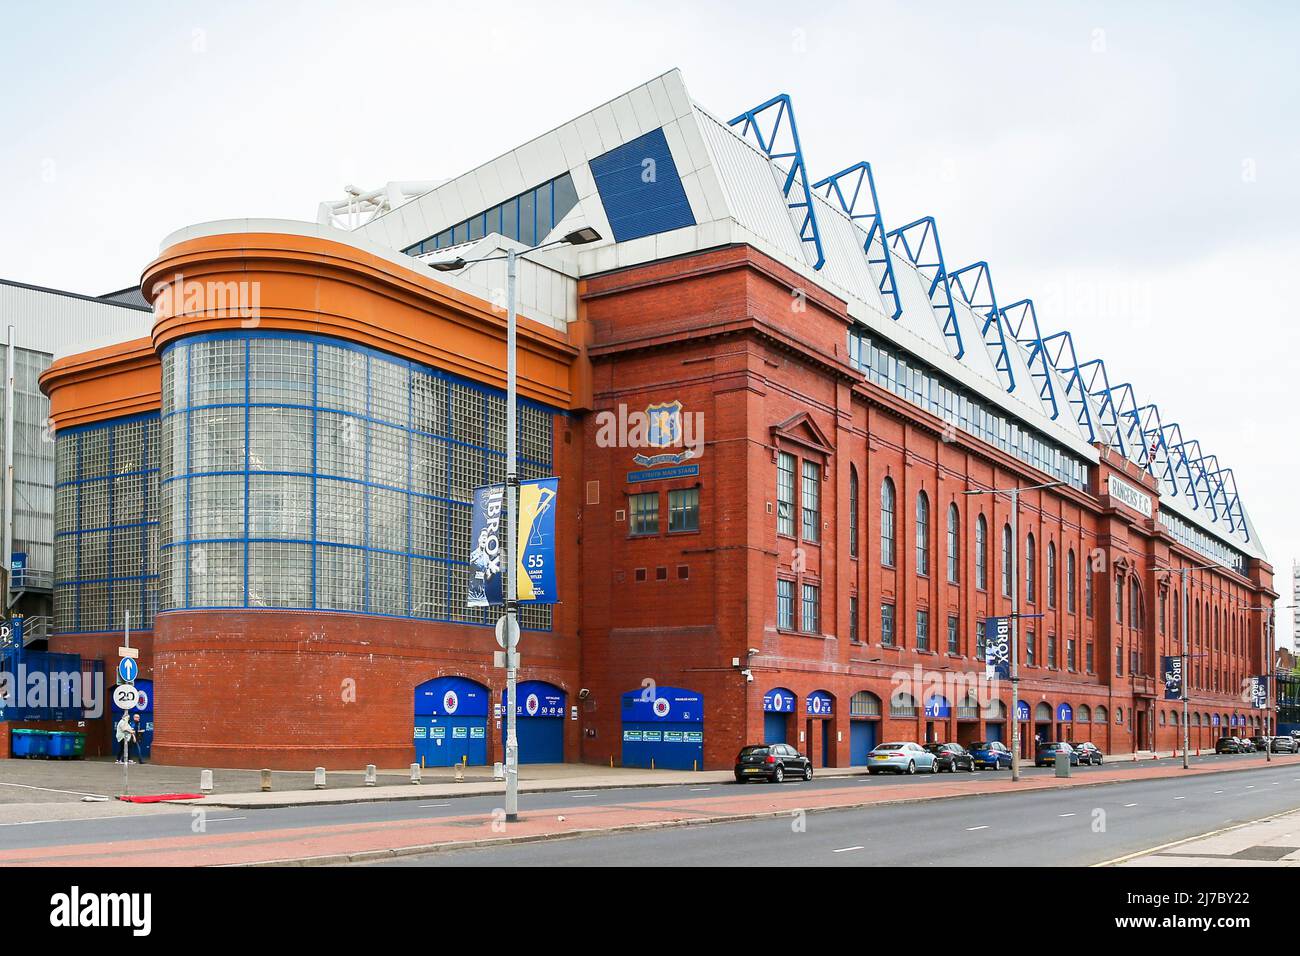 Entrance to Ibrox Football stadium, home of Rangers FC, Glasgow, Scotland, UK Stock Photo